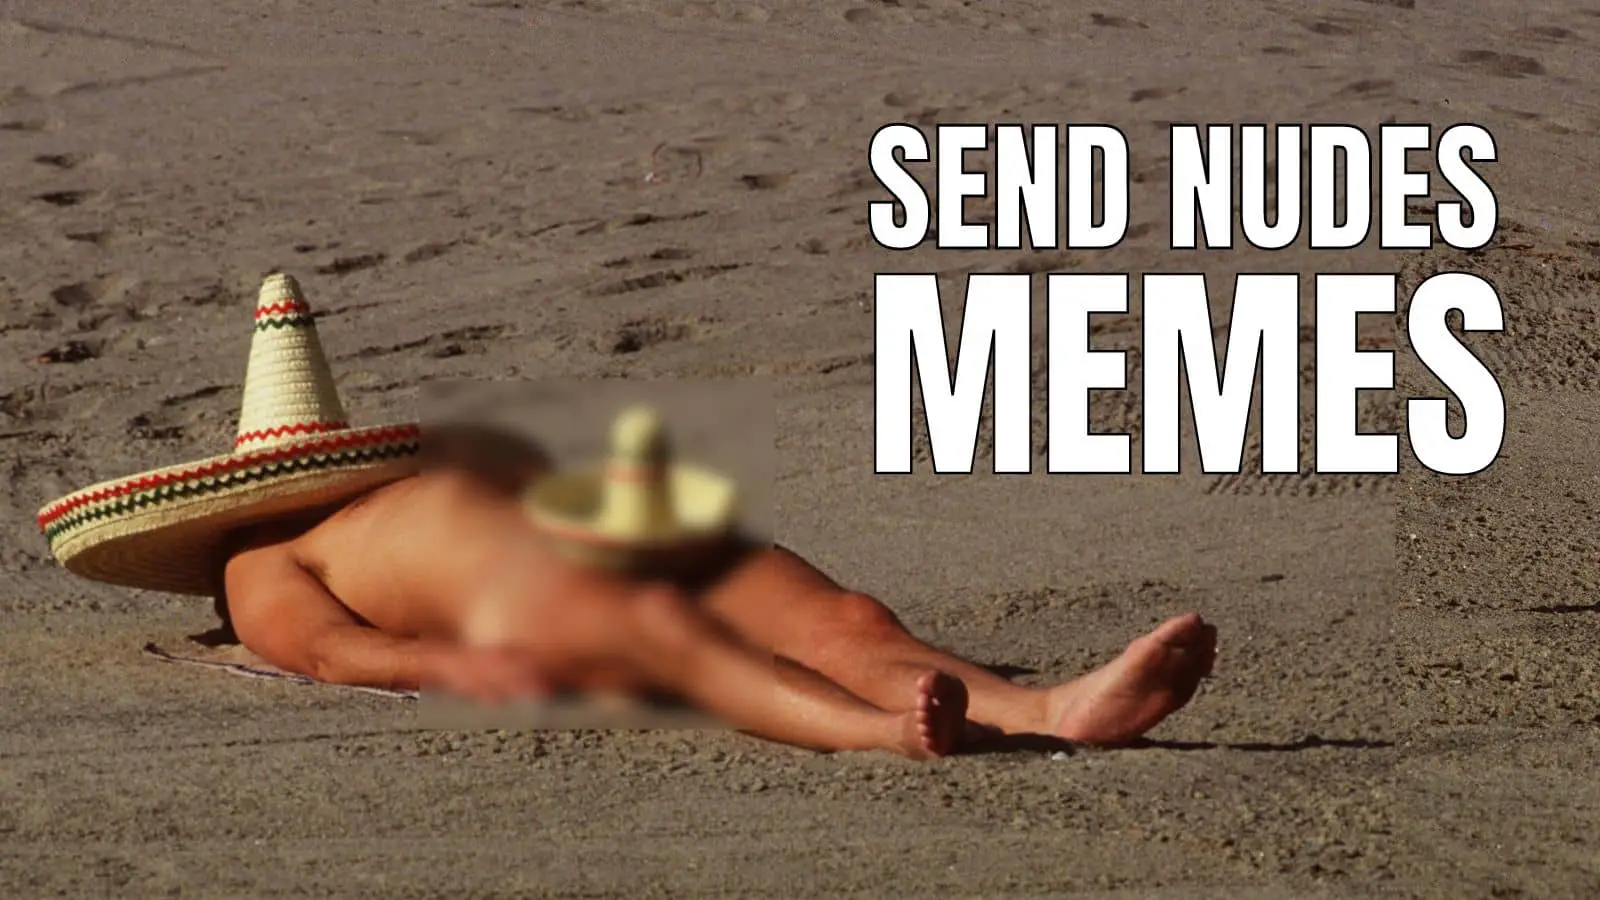 Funny Send Nudes Memes on Beach